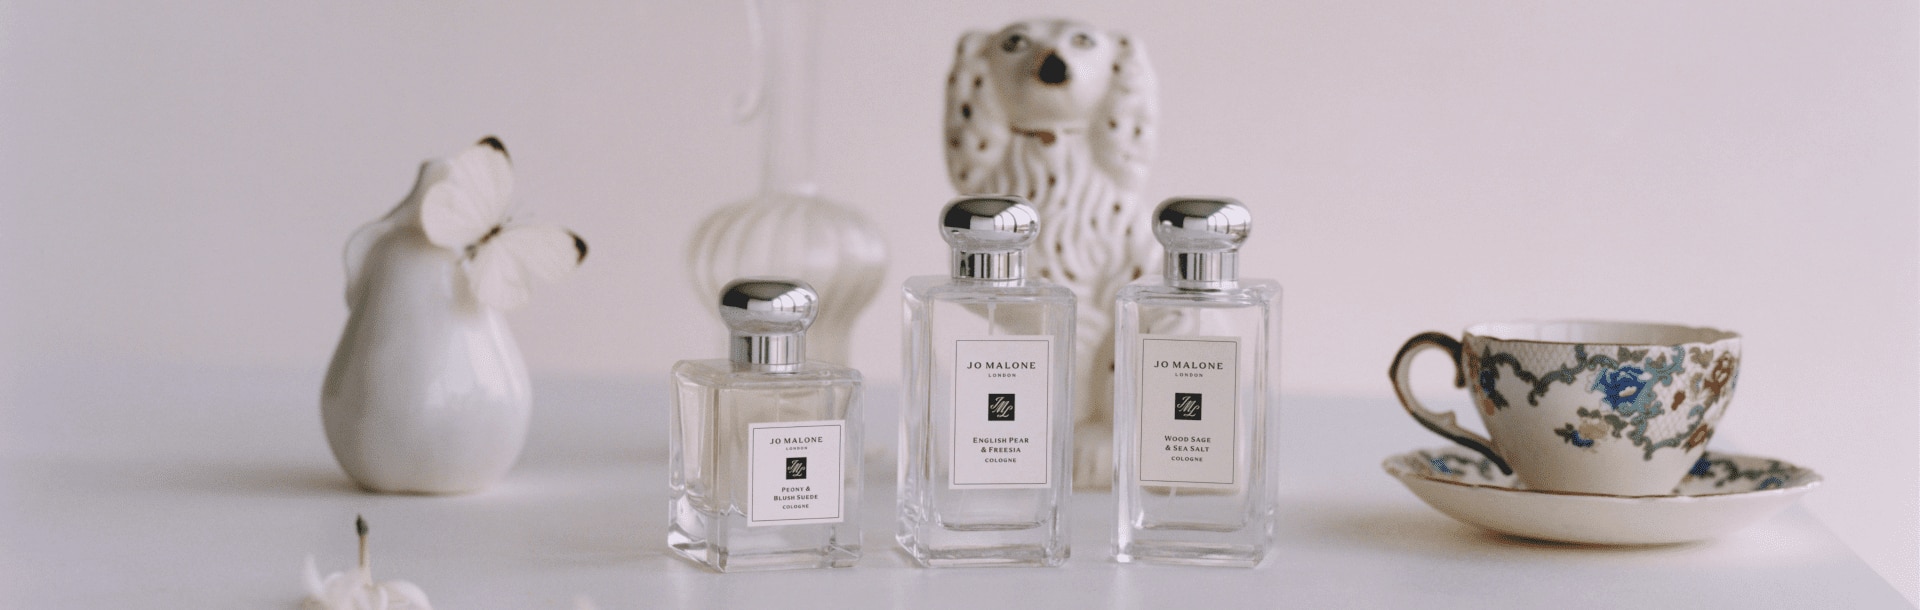 Luxury Perfumes & Colognes   Jo Malone London